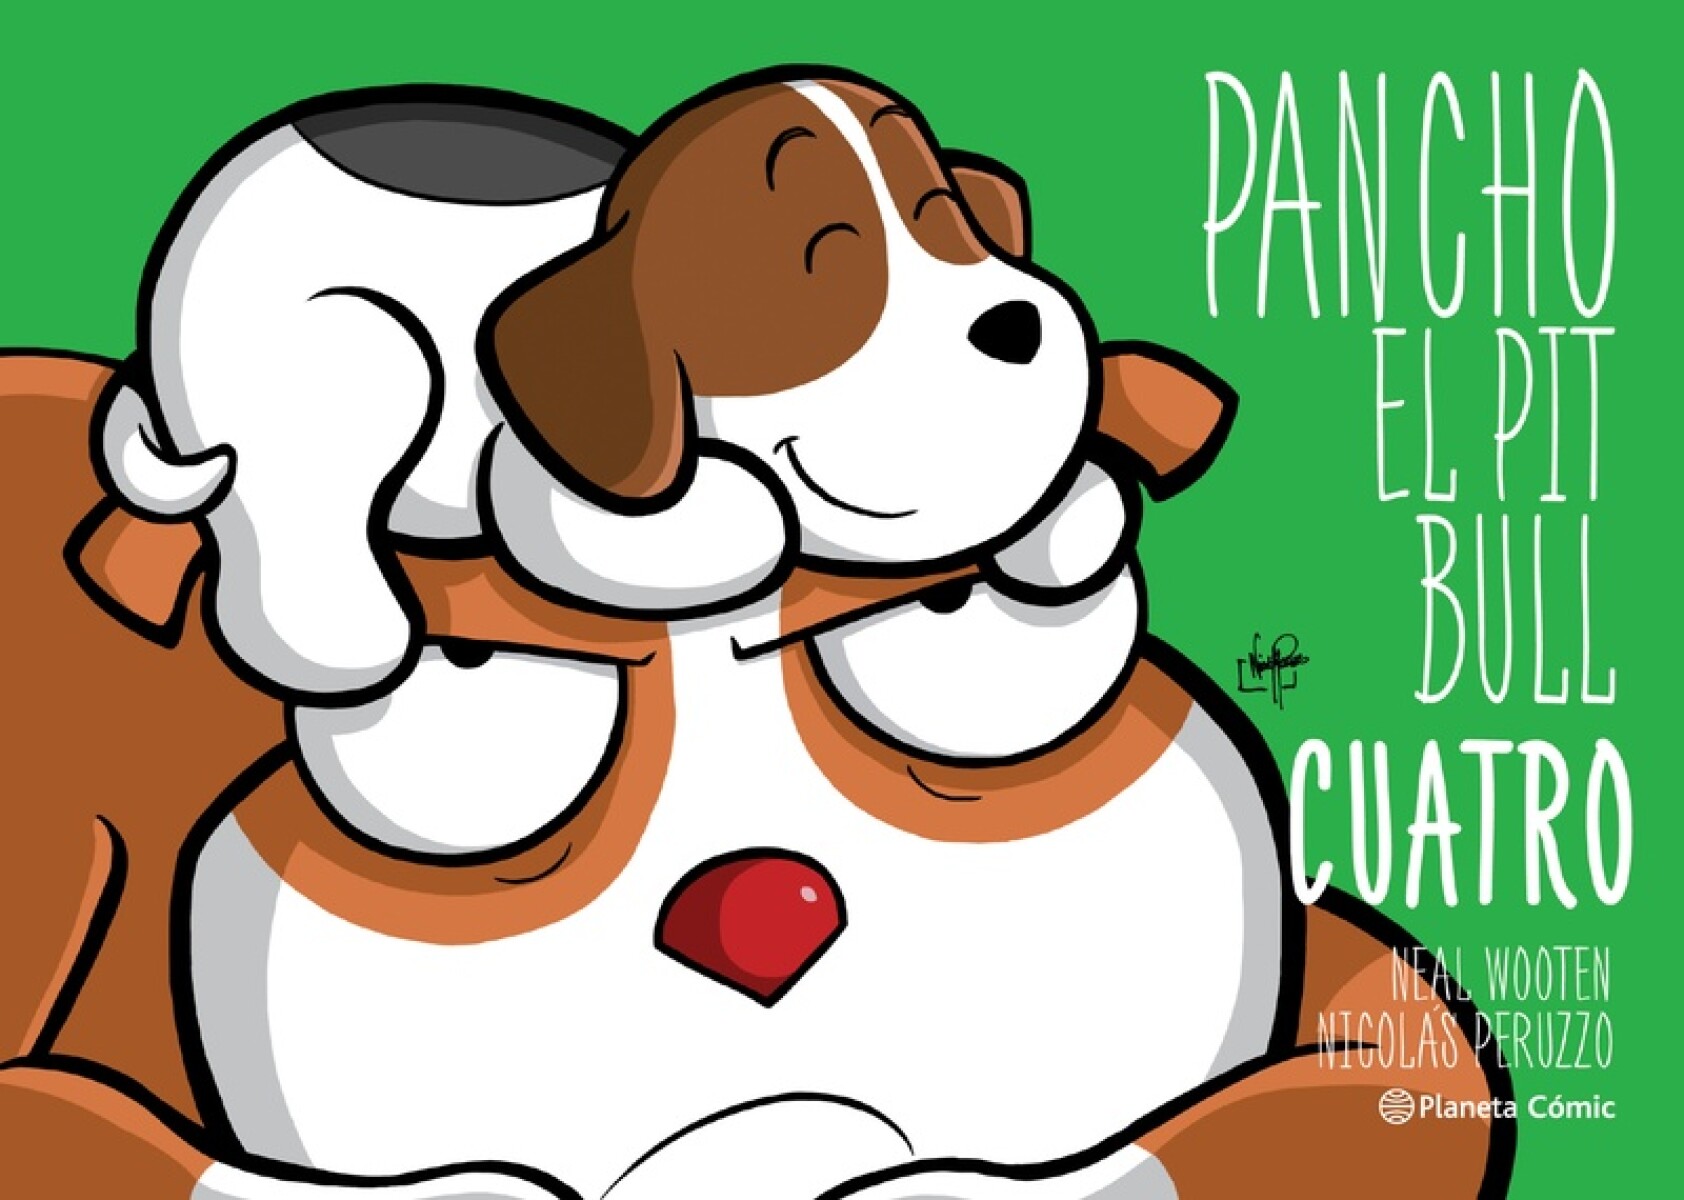 Pancho El Pitbull- Cuatro 